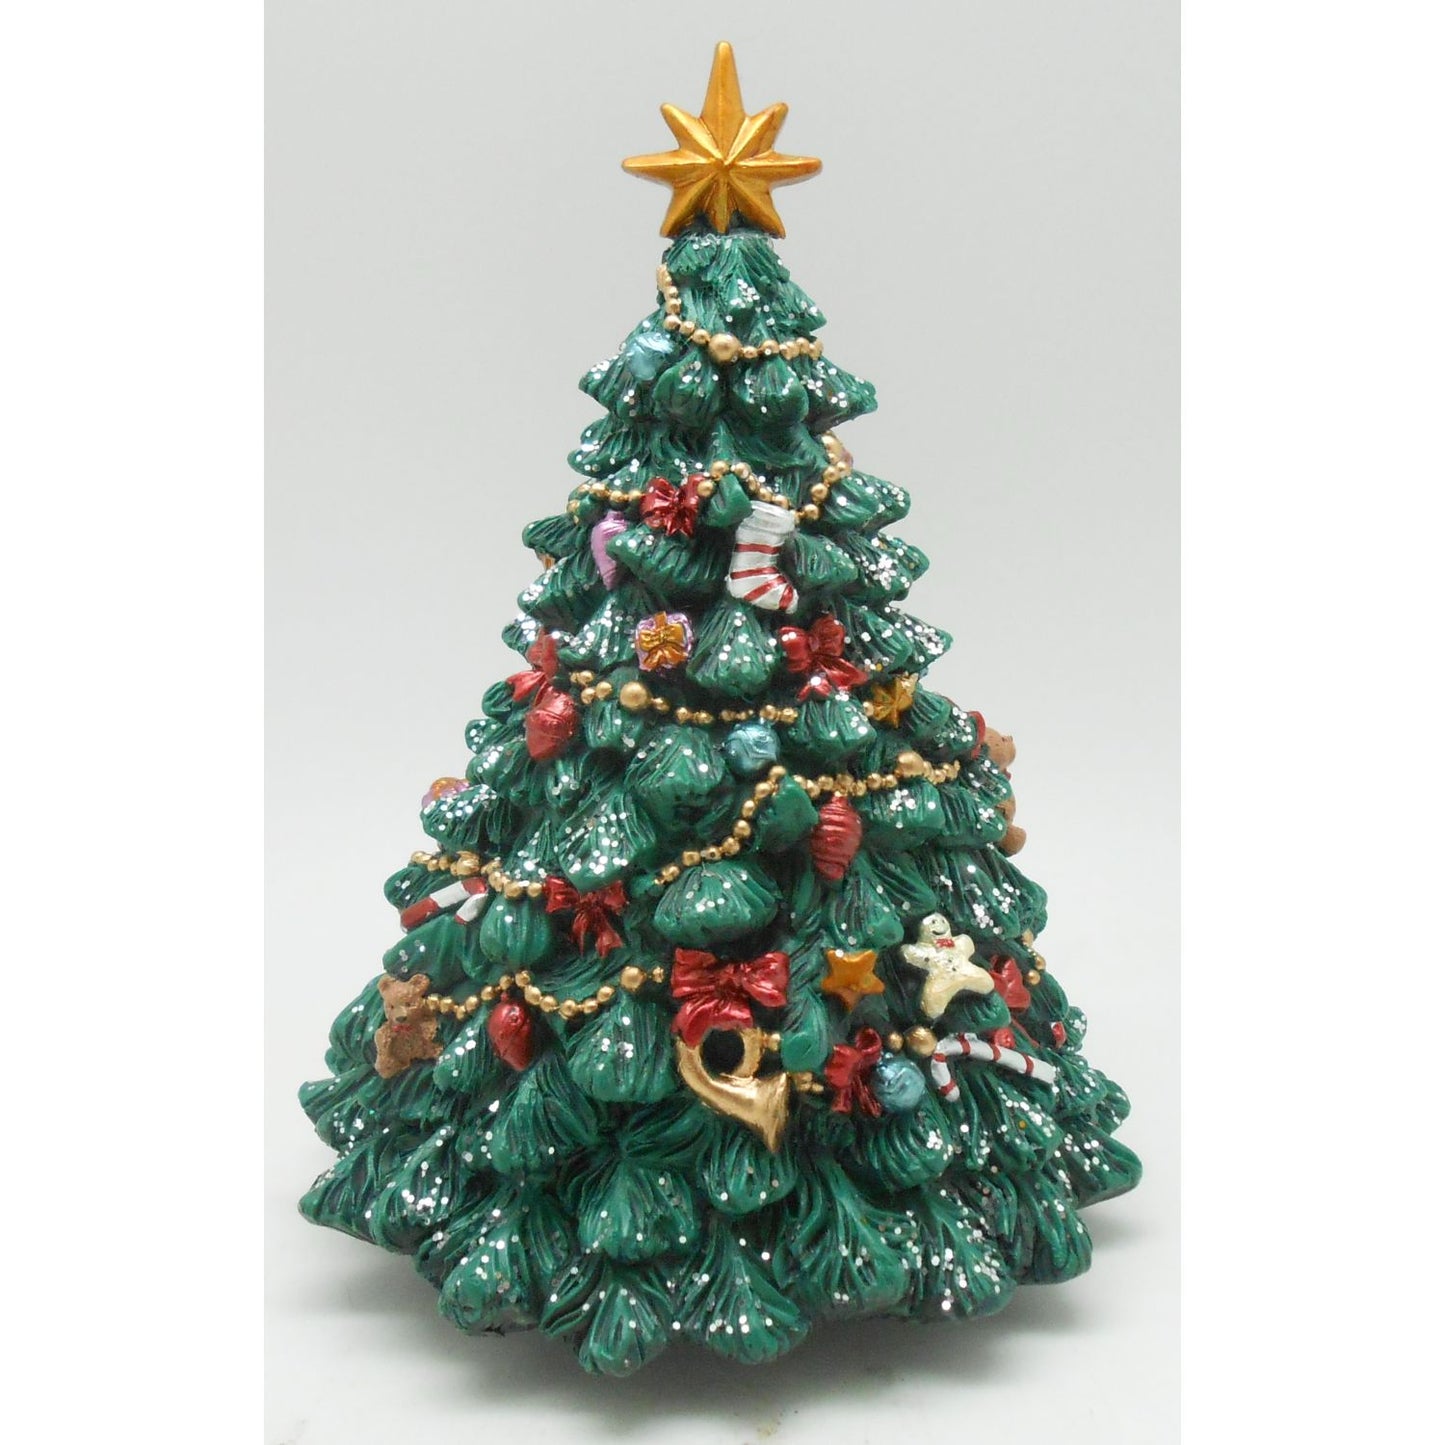 Musicbox Kingdom 7" Decorated Christmas Tree Plays "O Christmas Tree"